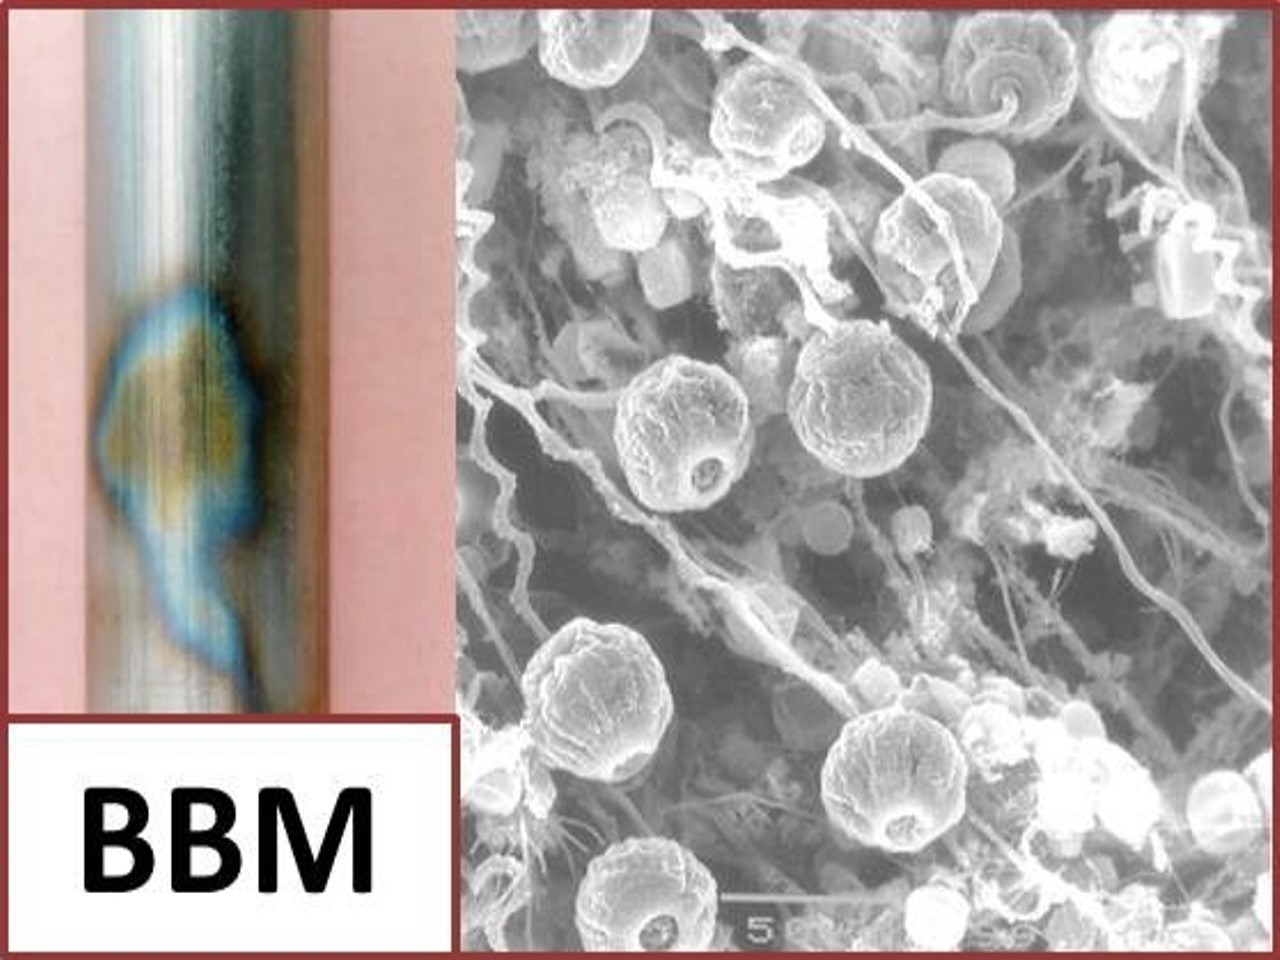 Biodeterioration and Biodegradation of Materials (BBM)